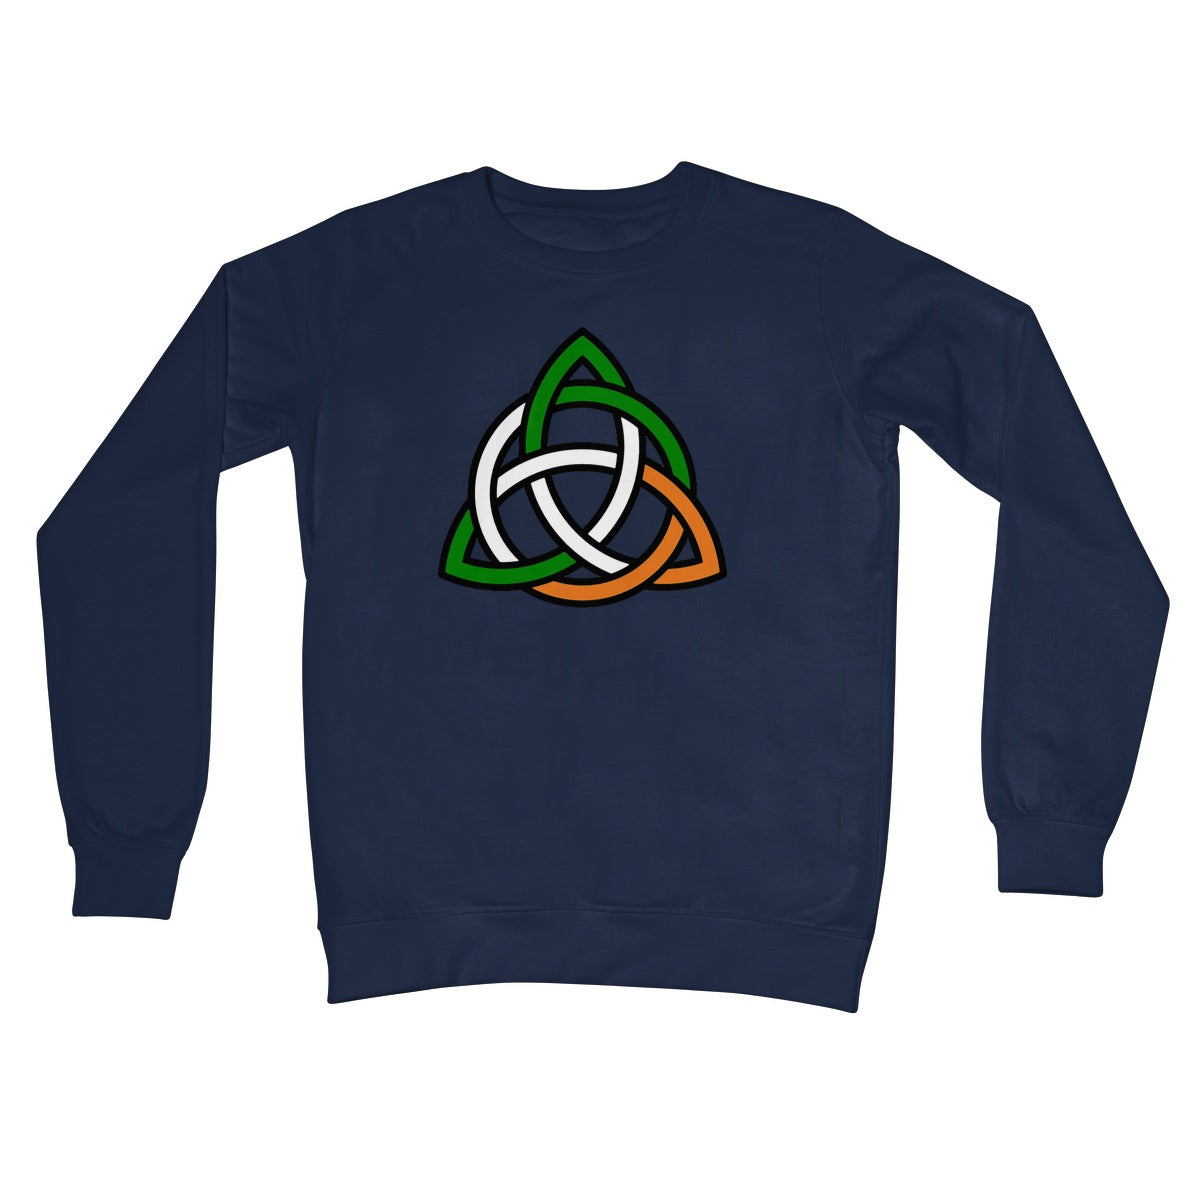 Irish Celtic Knot Crew Neck Sweatshirt